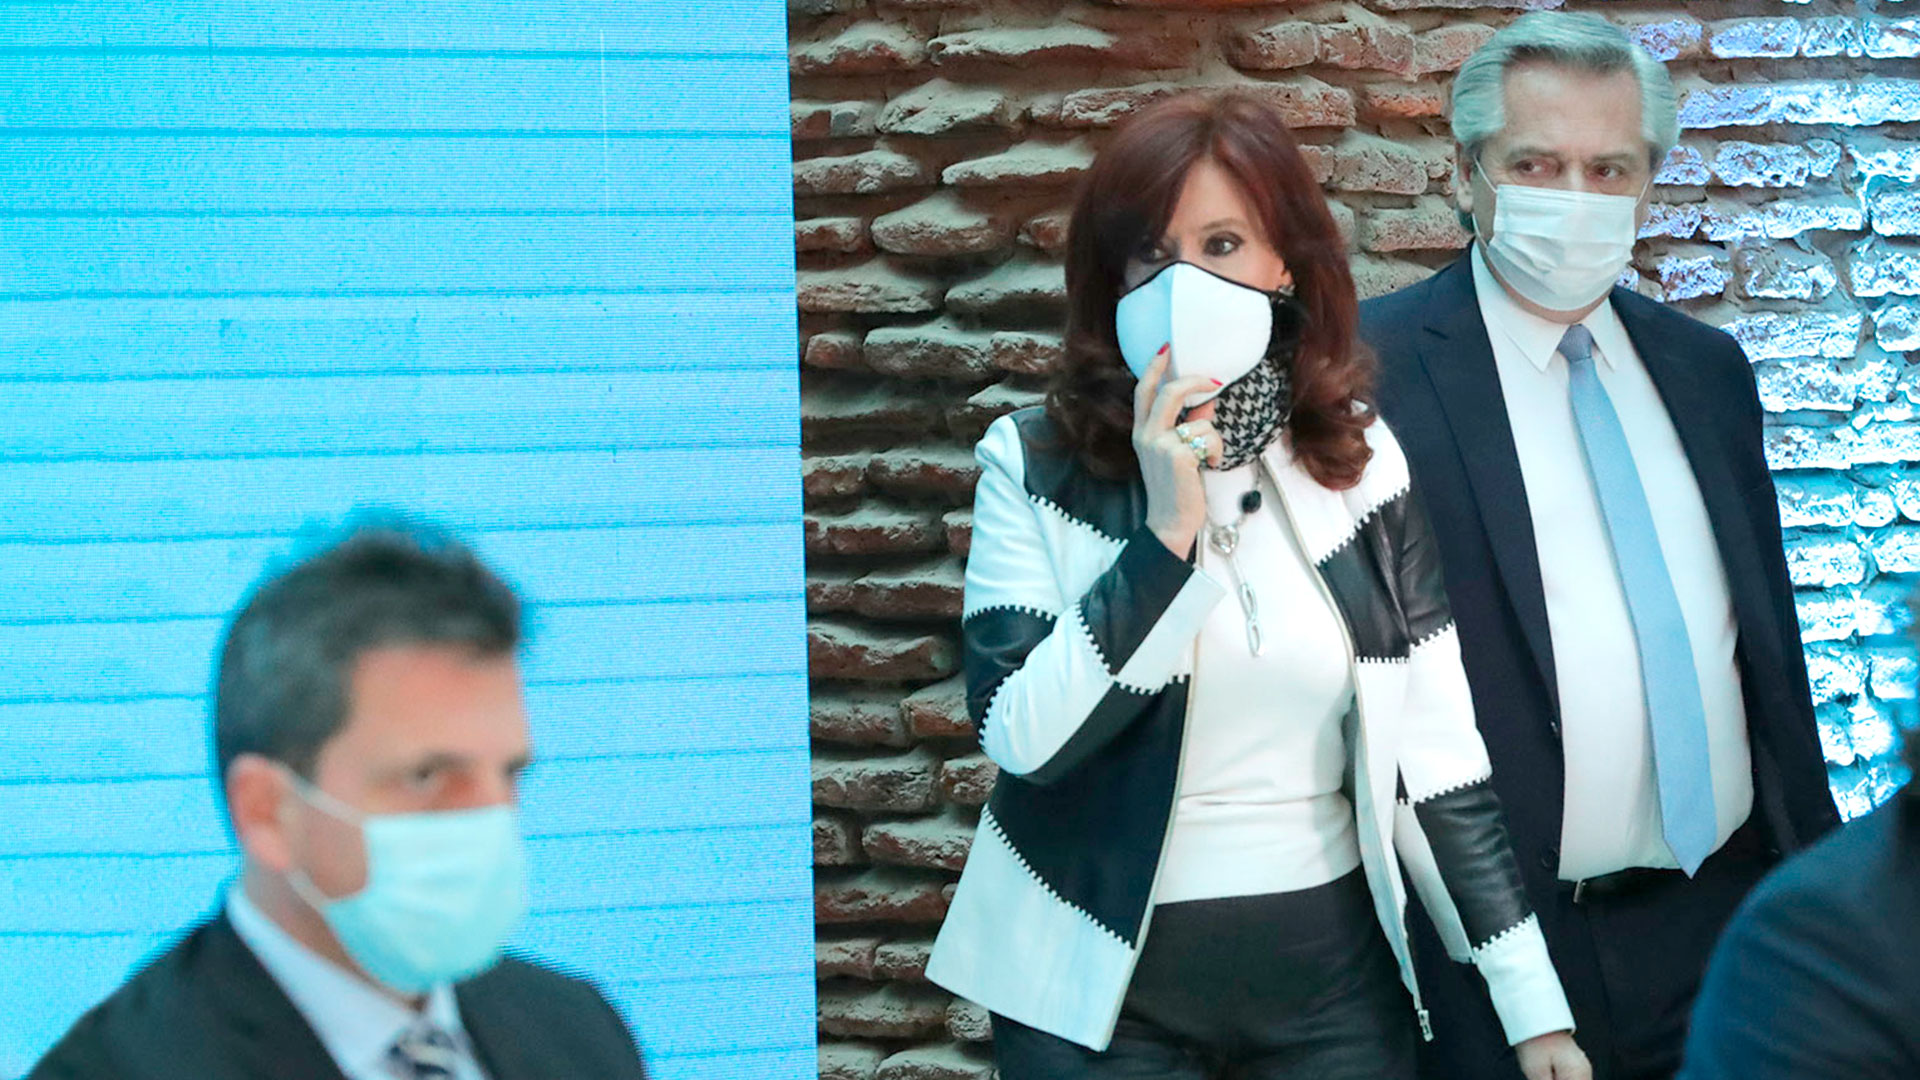 Un sector del peronismo le pide a Fernández que se reúna con Cristina Kirchner para sellar una tregua